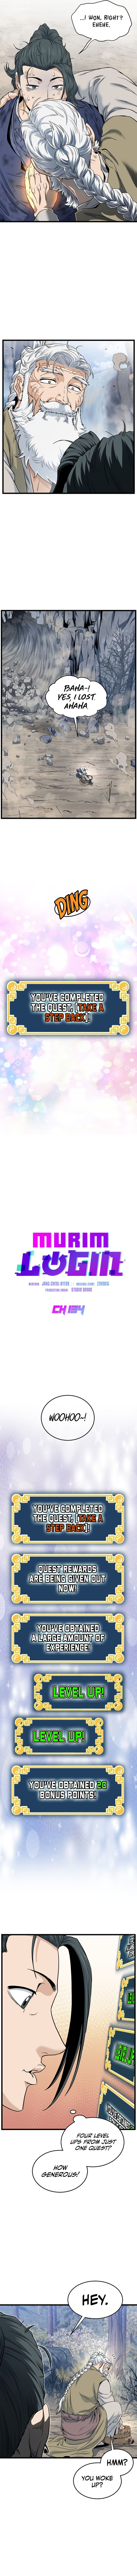 Murim Login - Page 4